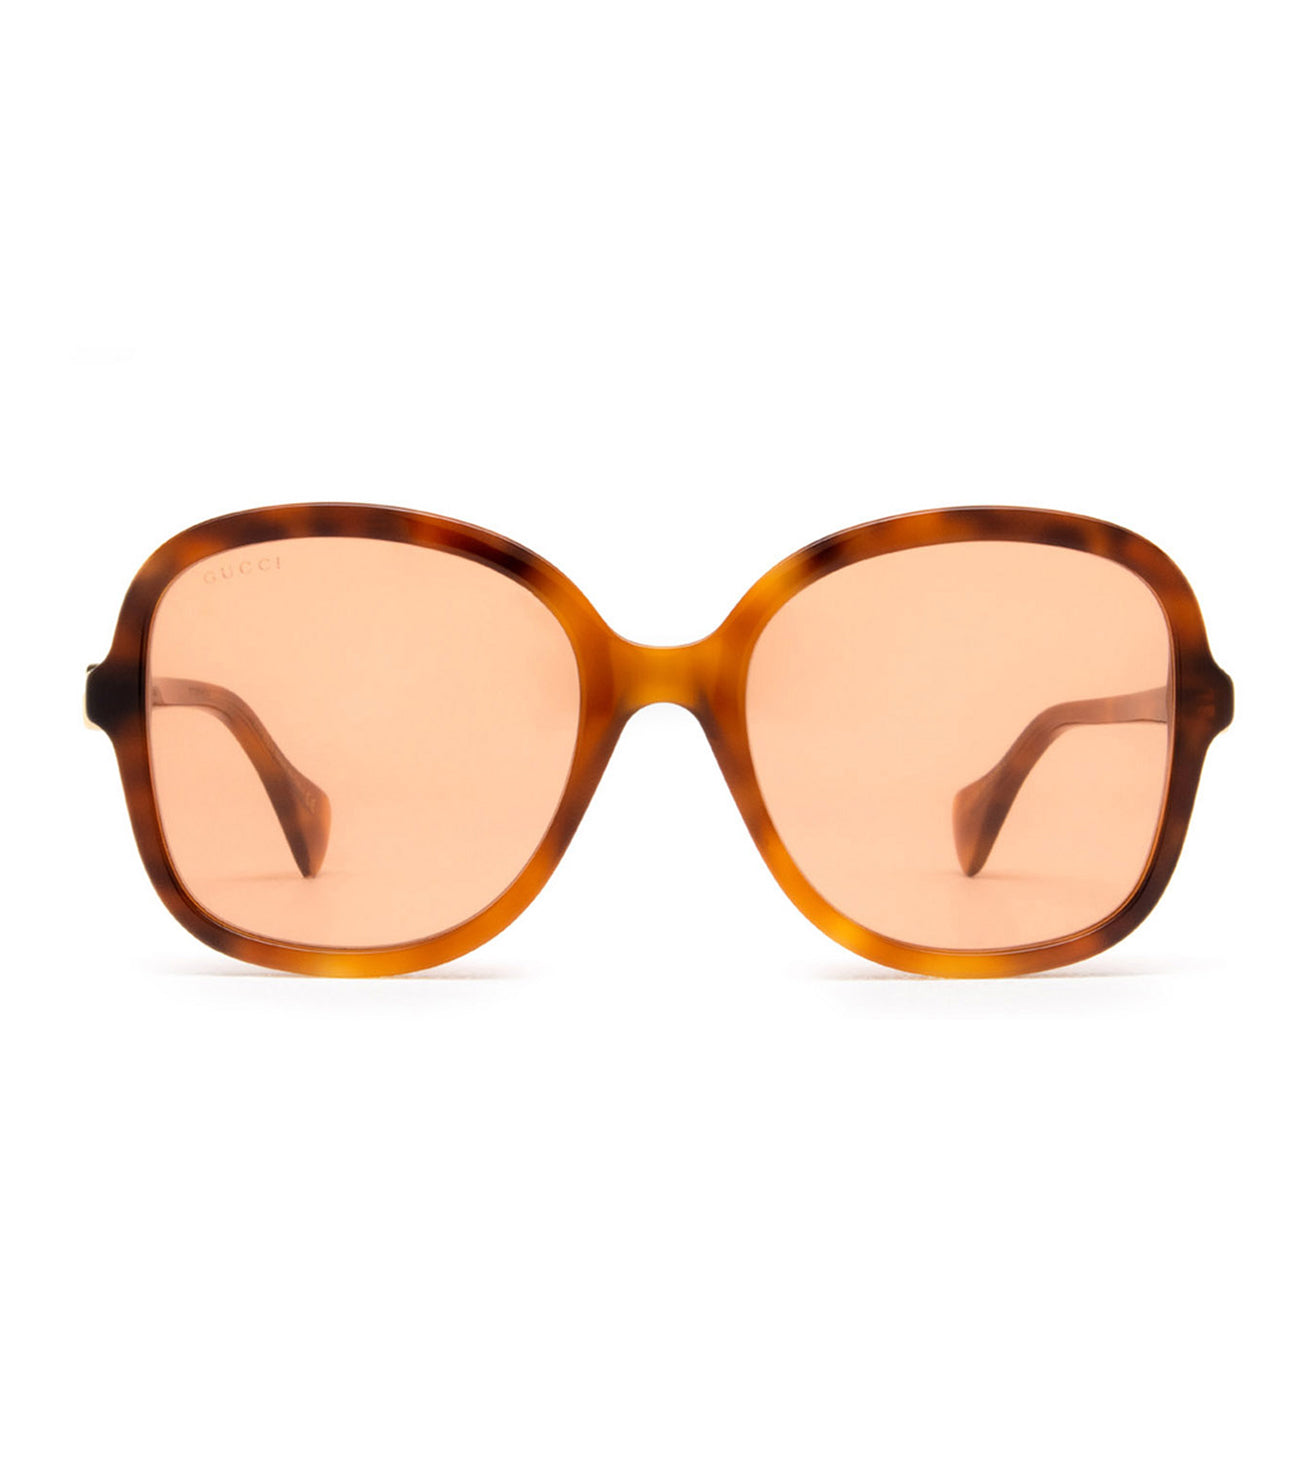 Gucci Women's Orange Butterfly Sunglasses